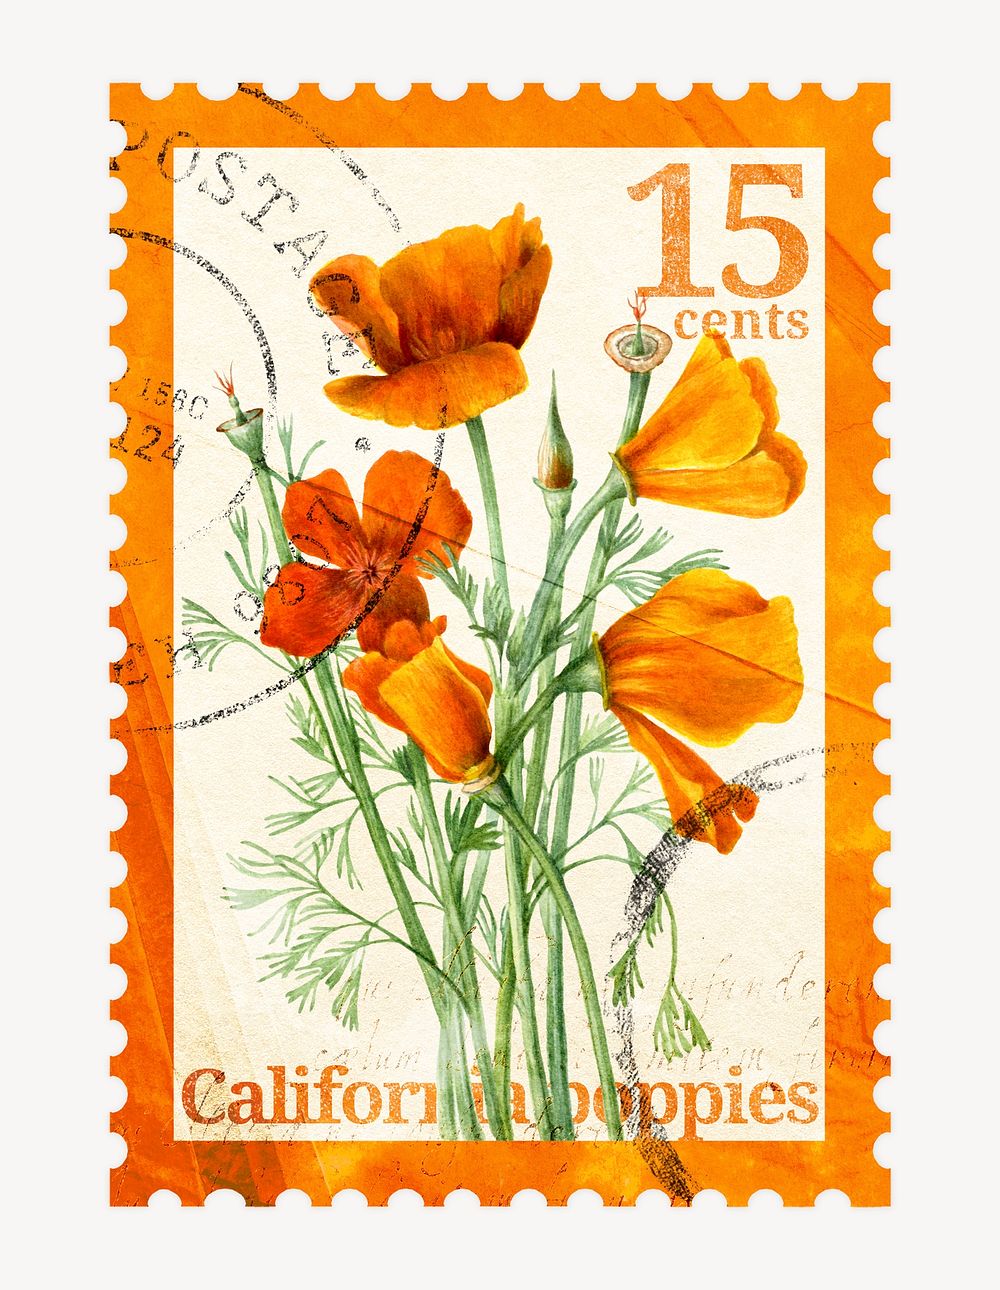 Aesthetic orange poppy flower postage stamp illustration